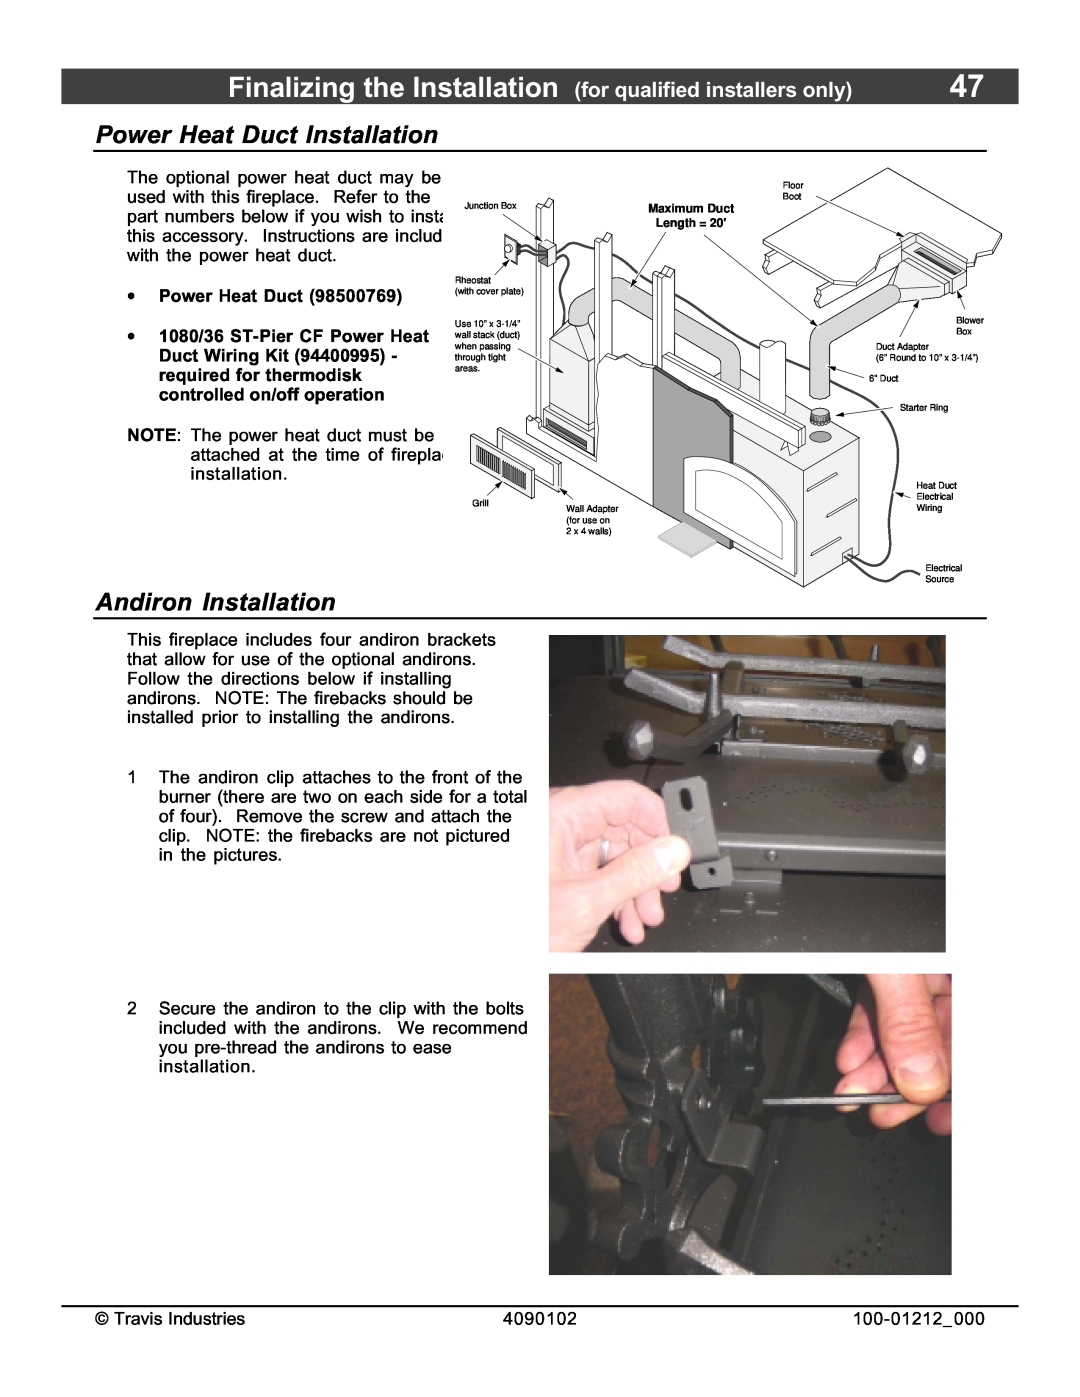 FireplaceXtrordinair 36CF installation manual Power Heat Duct Installation, Andiron Installation 